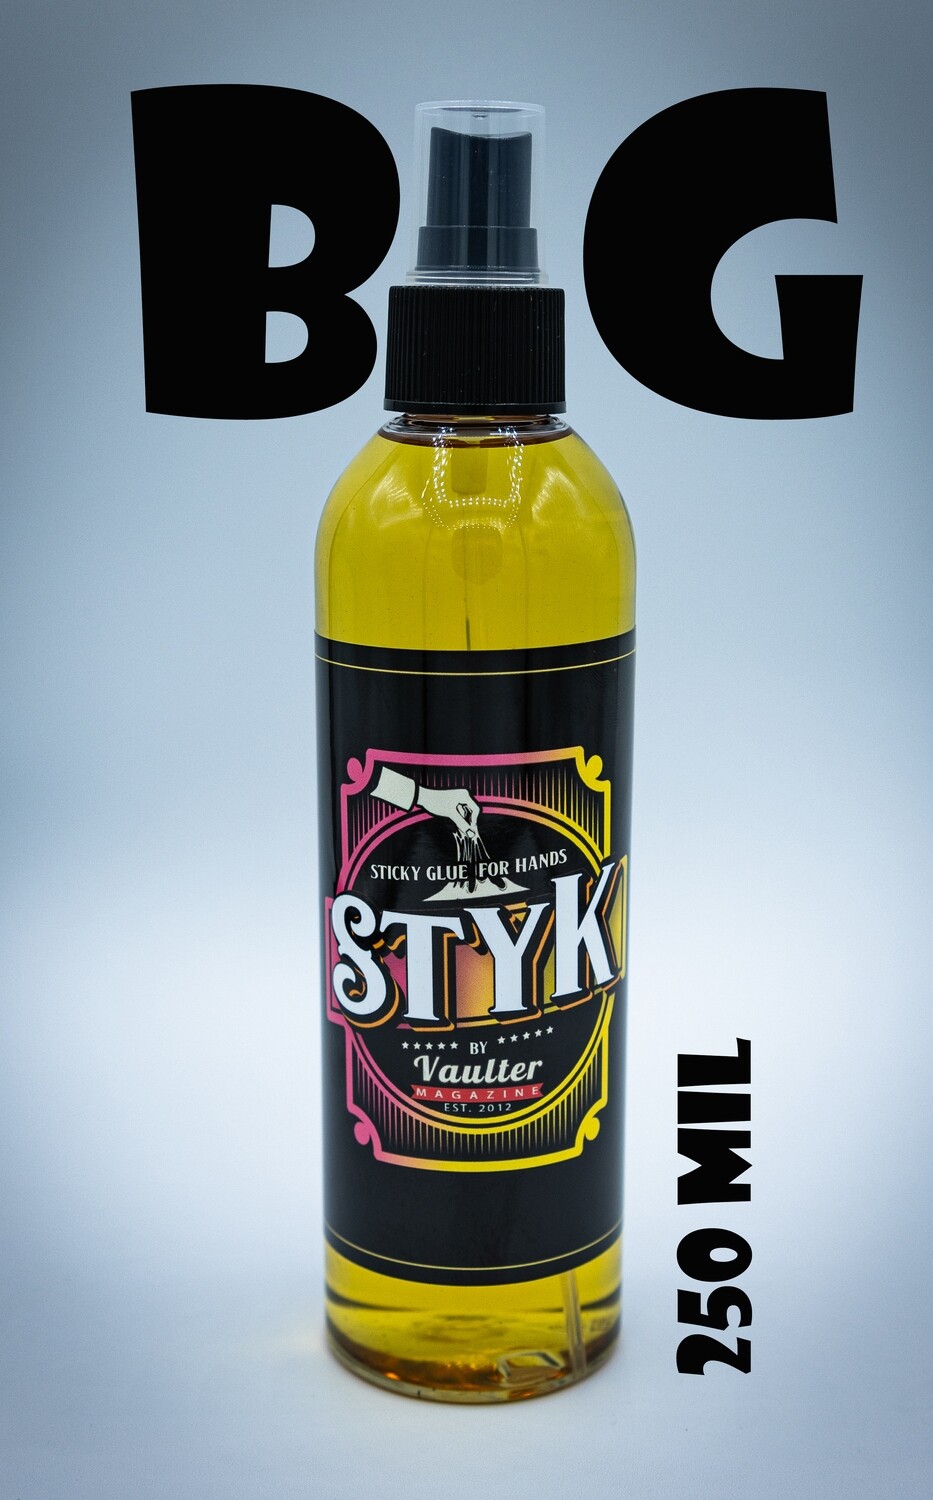 STYK by Vaulter Magazine 250ml Spray Vanilla MYST